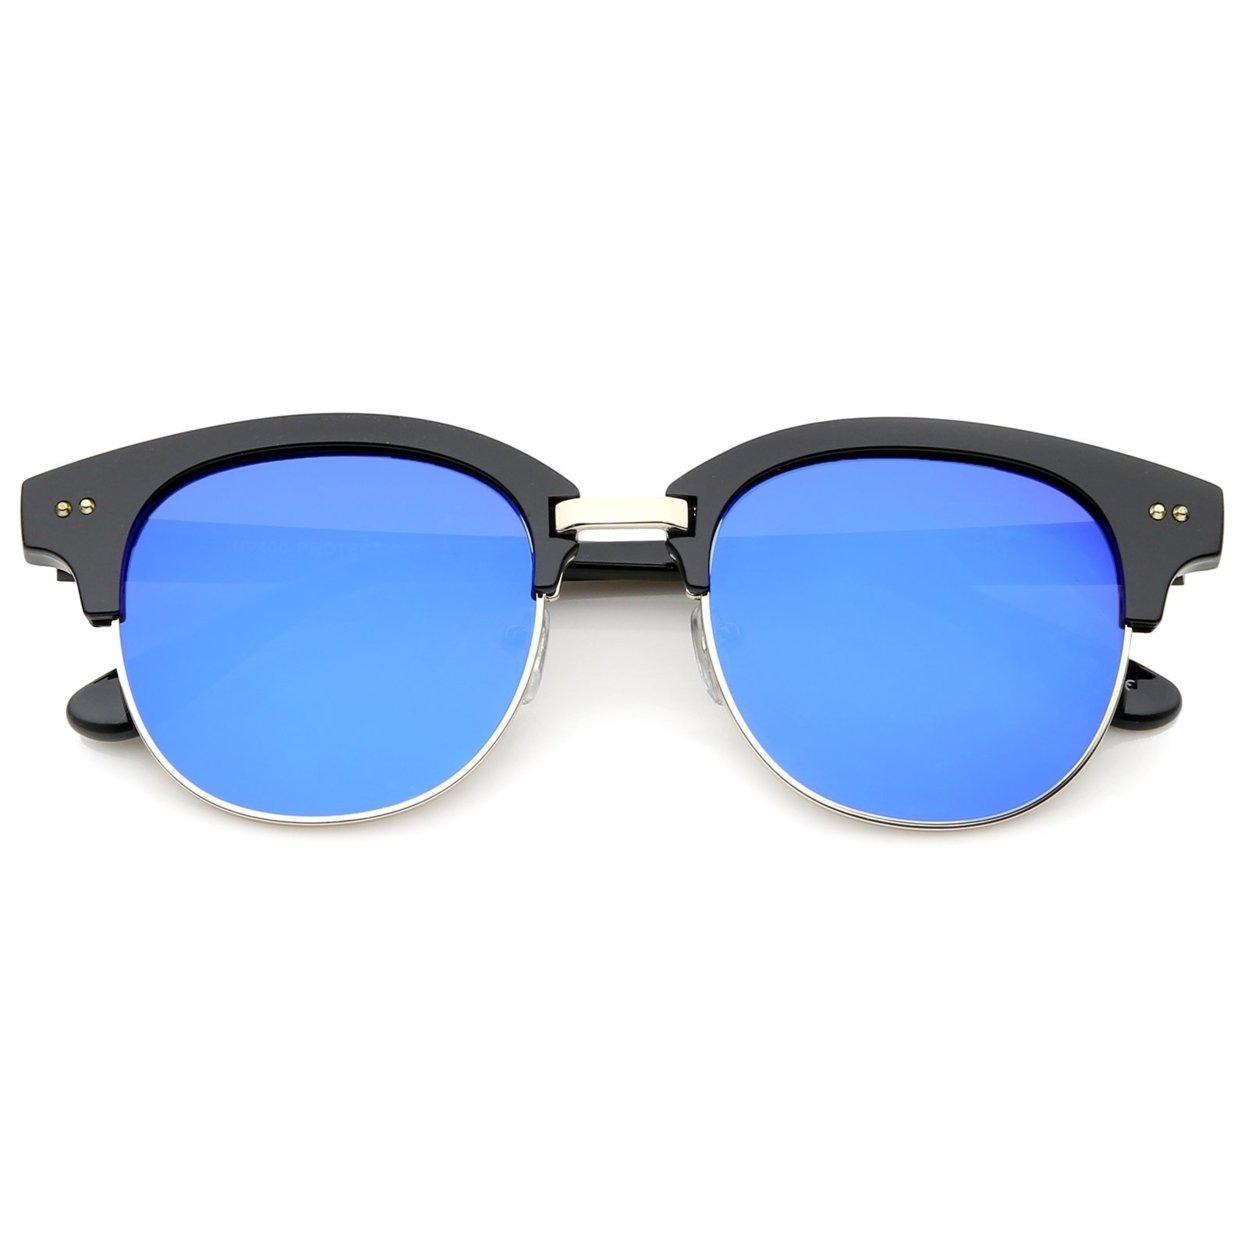 Bold Metal Nose Bridge Color Mirror Lens Round Half-Frame Sunglasses 52mm - Black-Gold / Gold Mirror